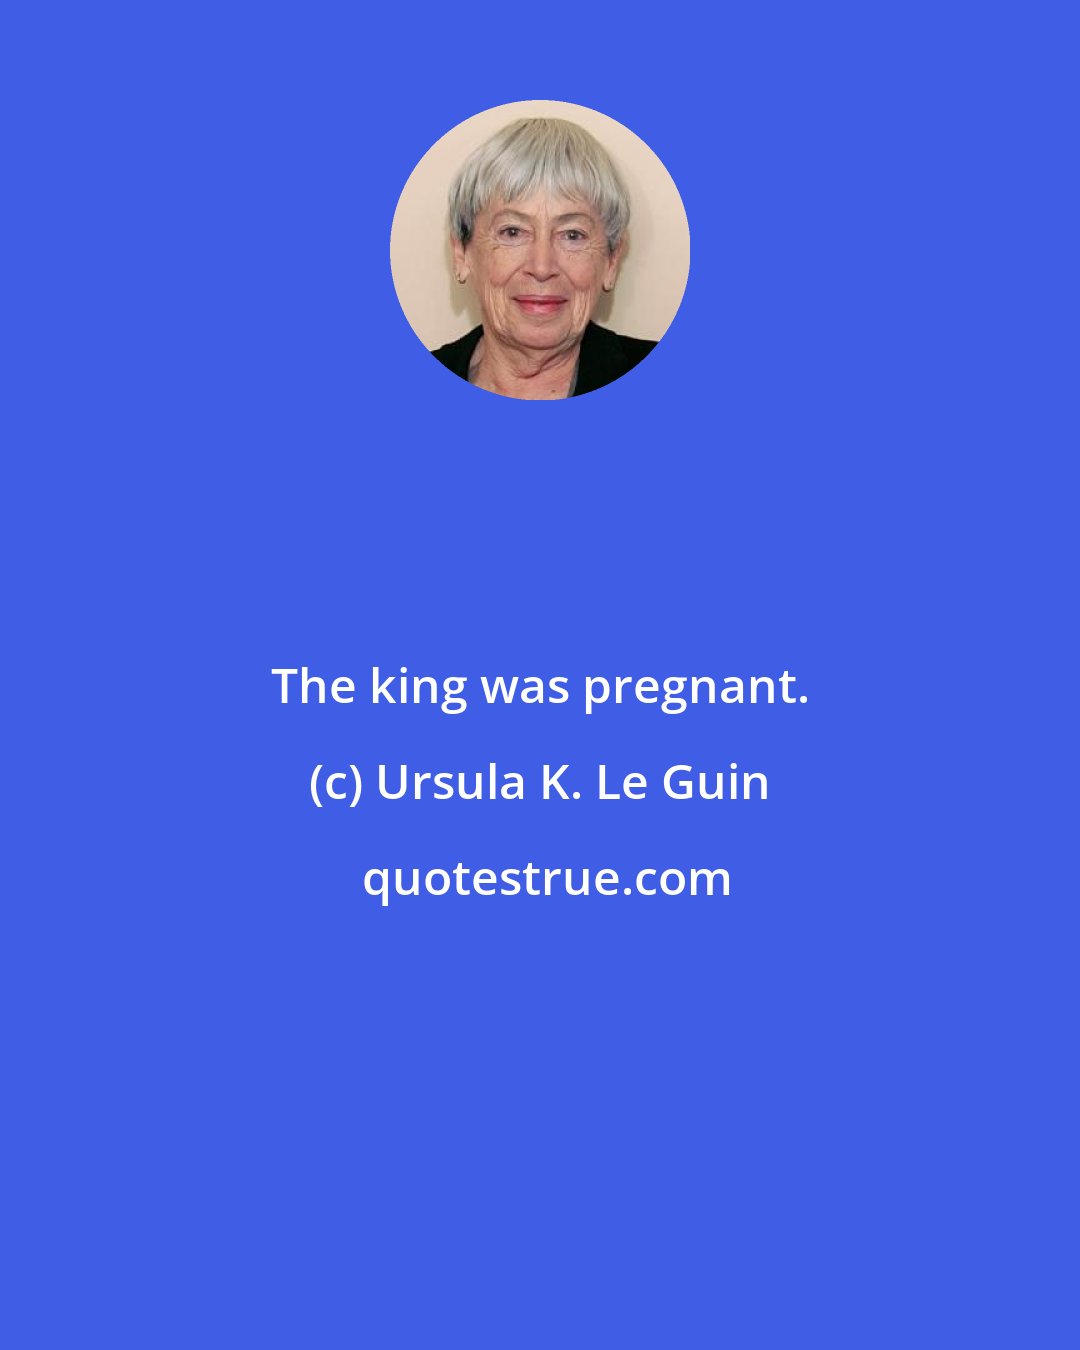 Ursula K. Le Guin: The king was pregnant.